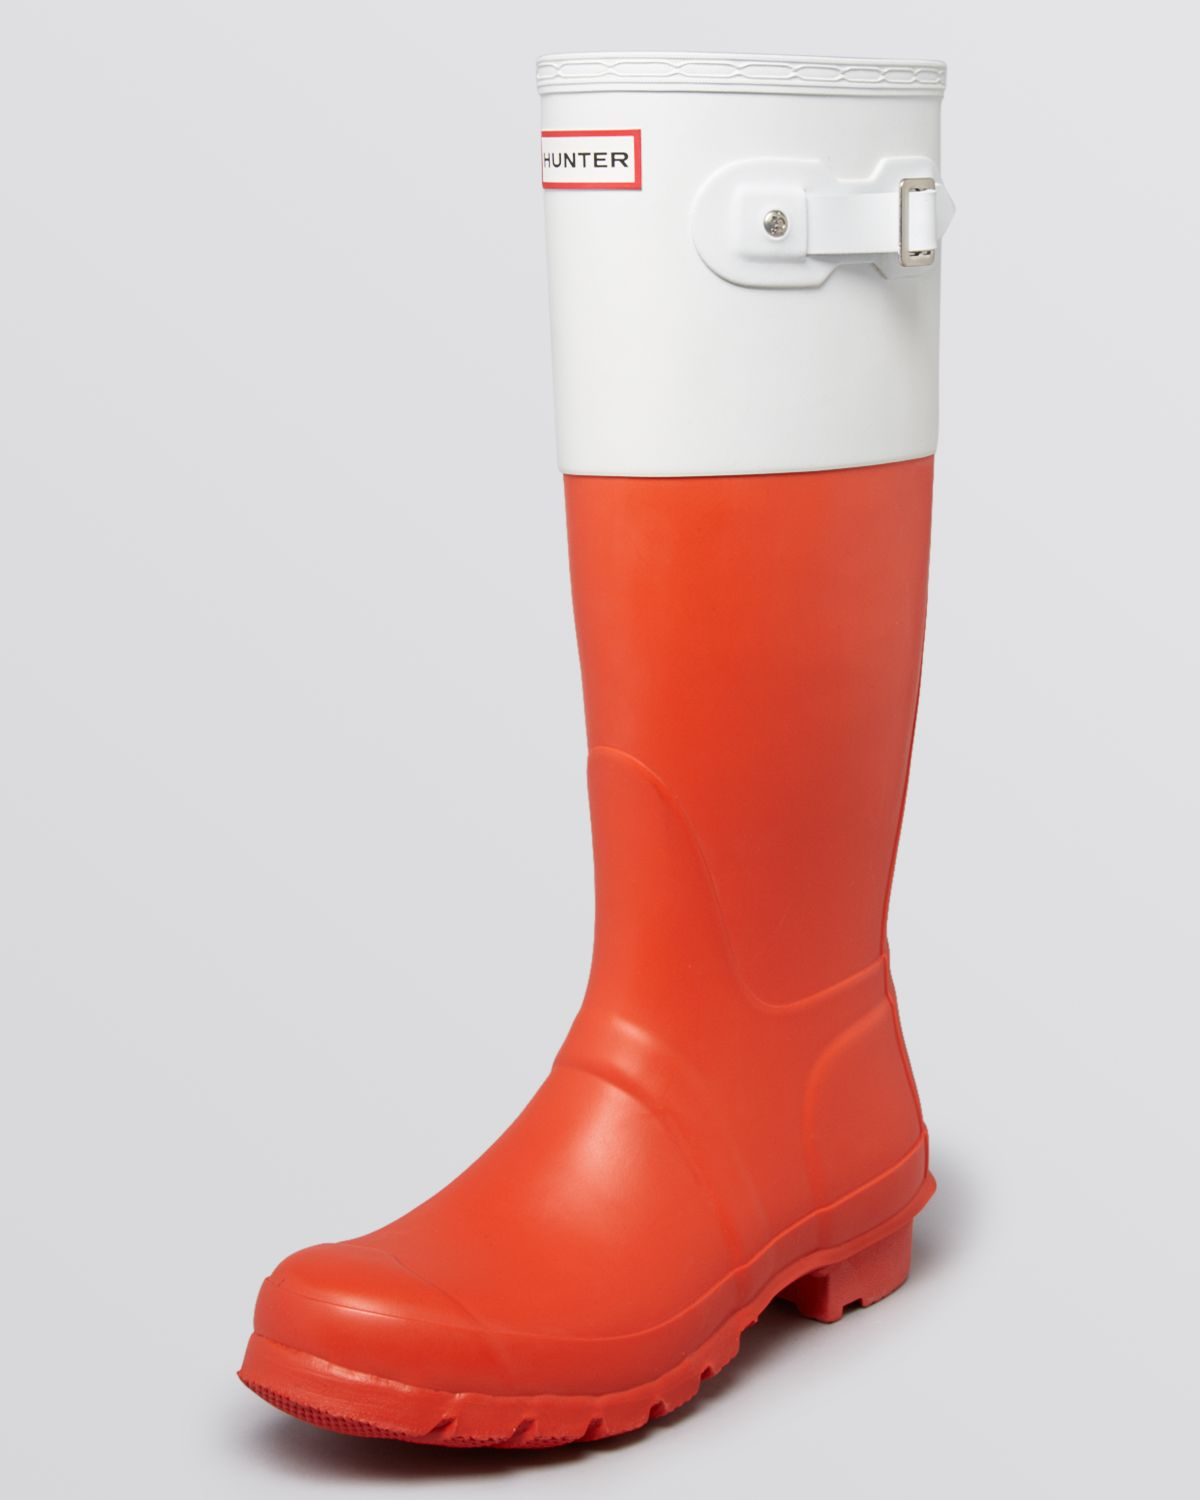 HUNTER Rain Boots Original Color Block in Clementine ...